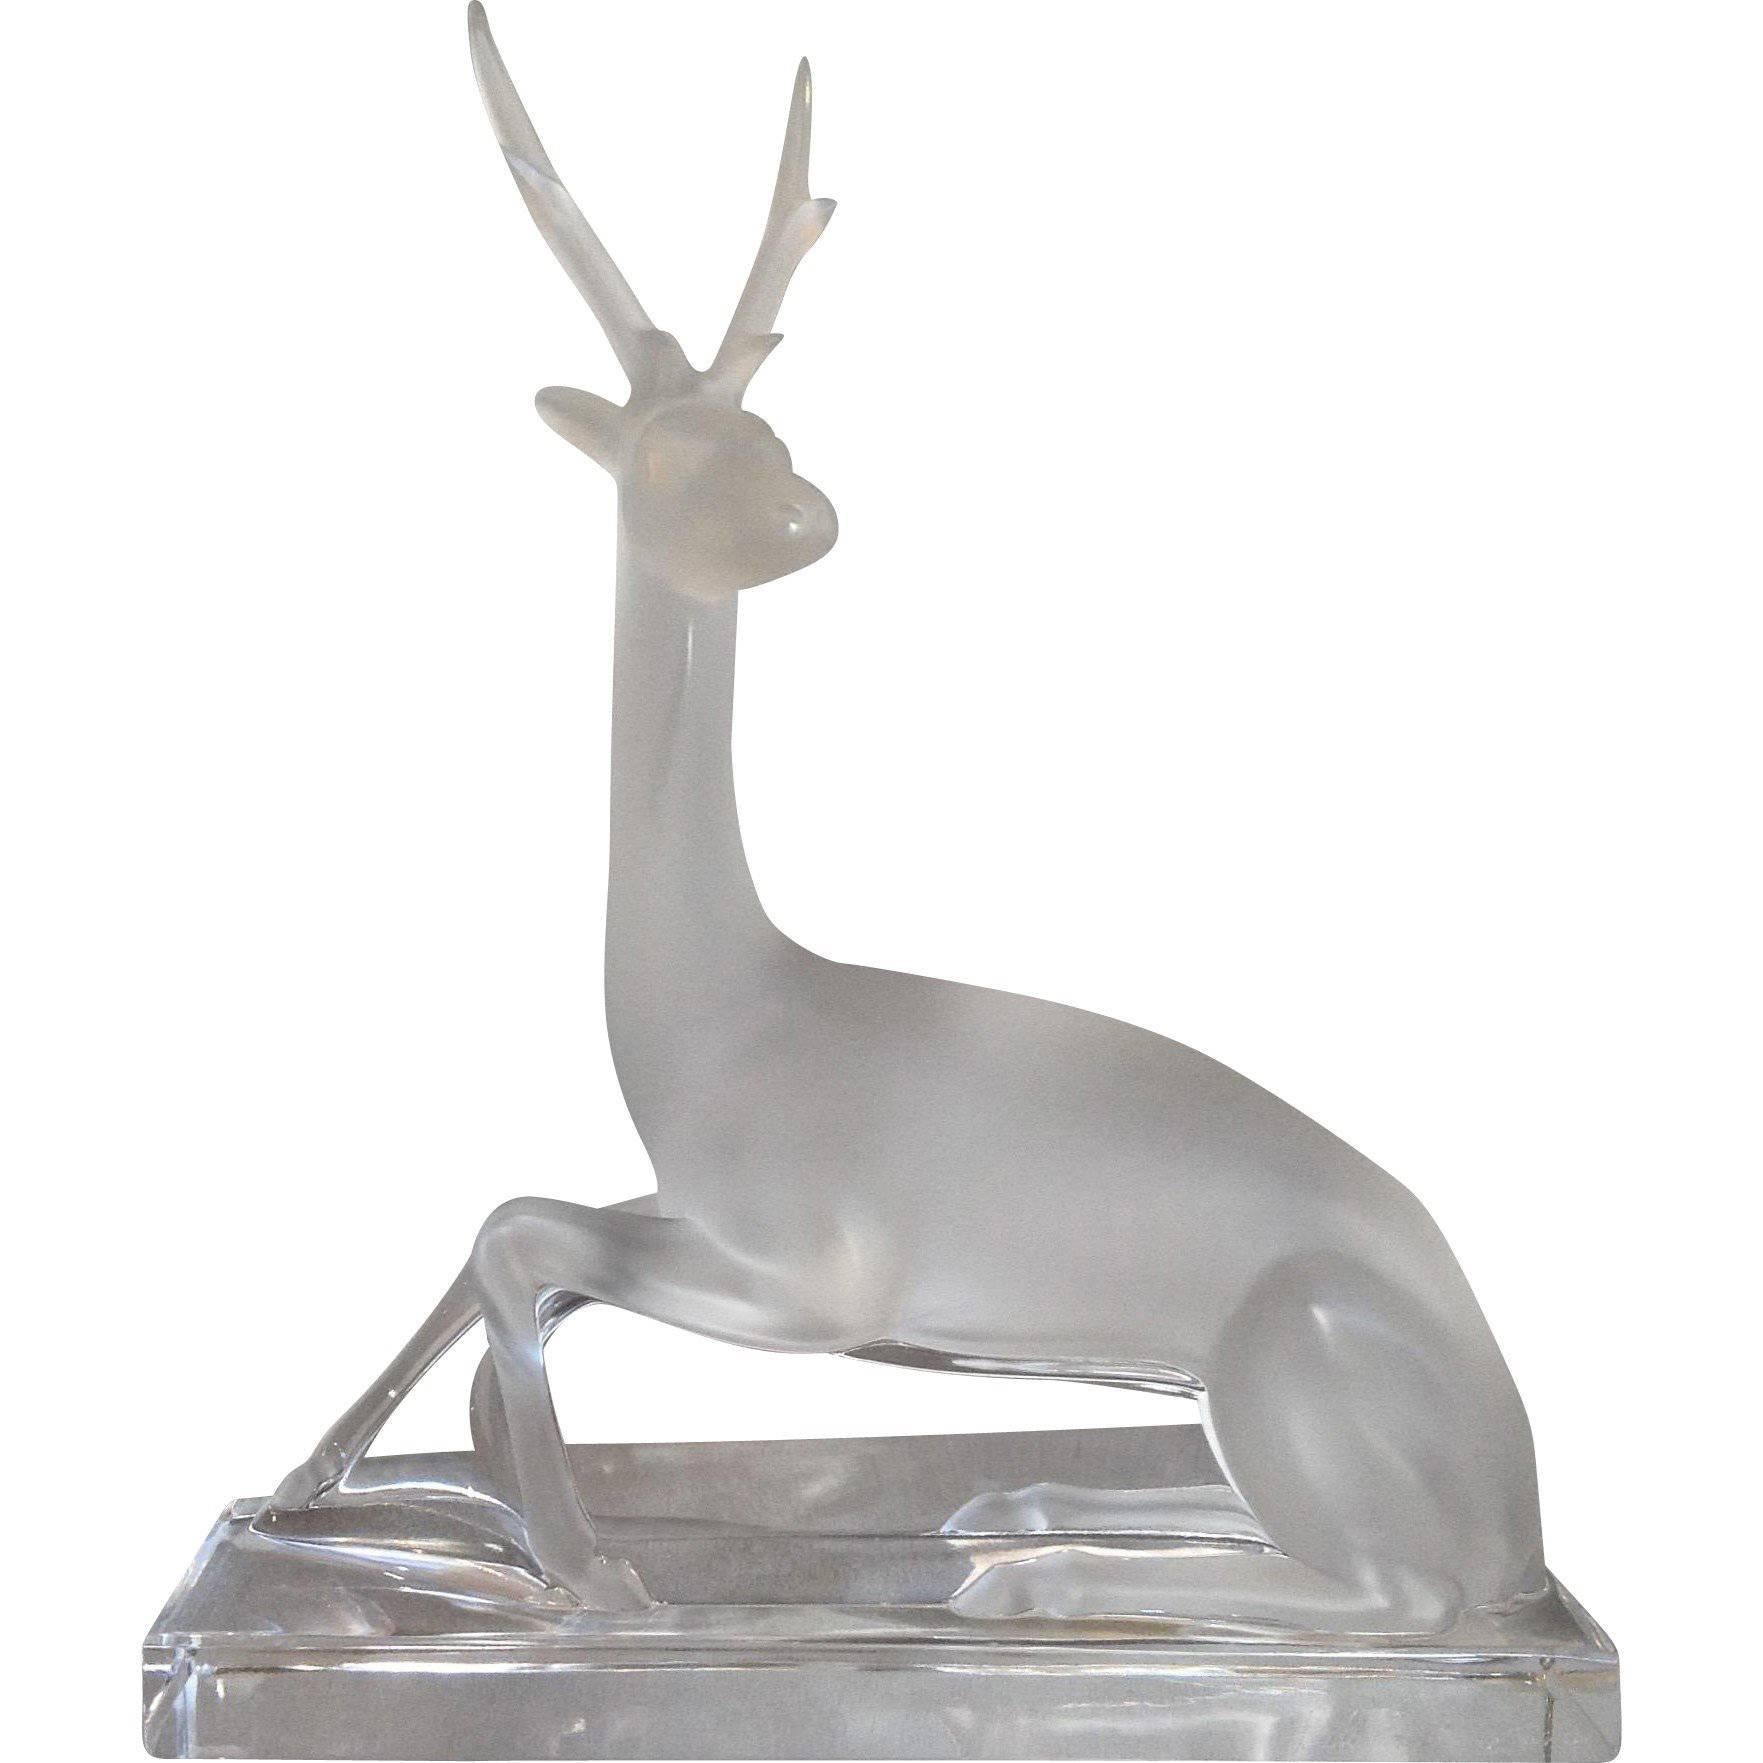 Lalique Crystal Deer Figurine, "Cerf" 'Catalog No. 11630 - Discontinued' For Sale